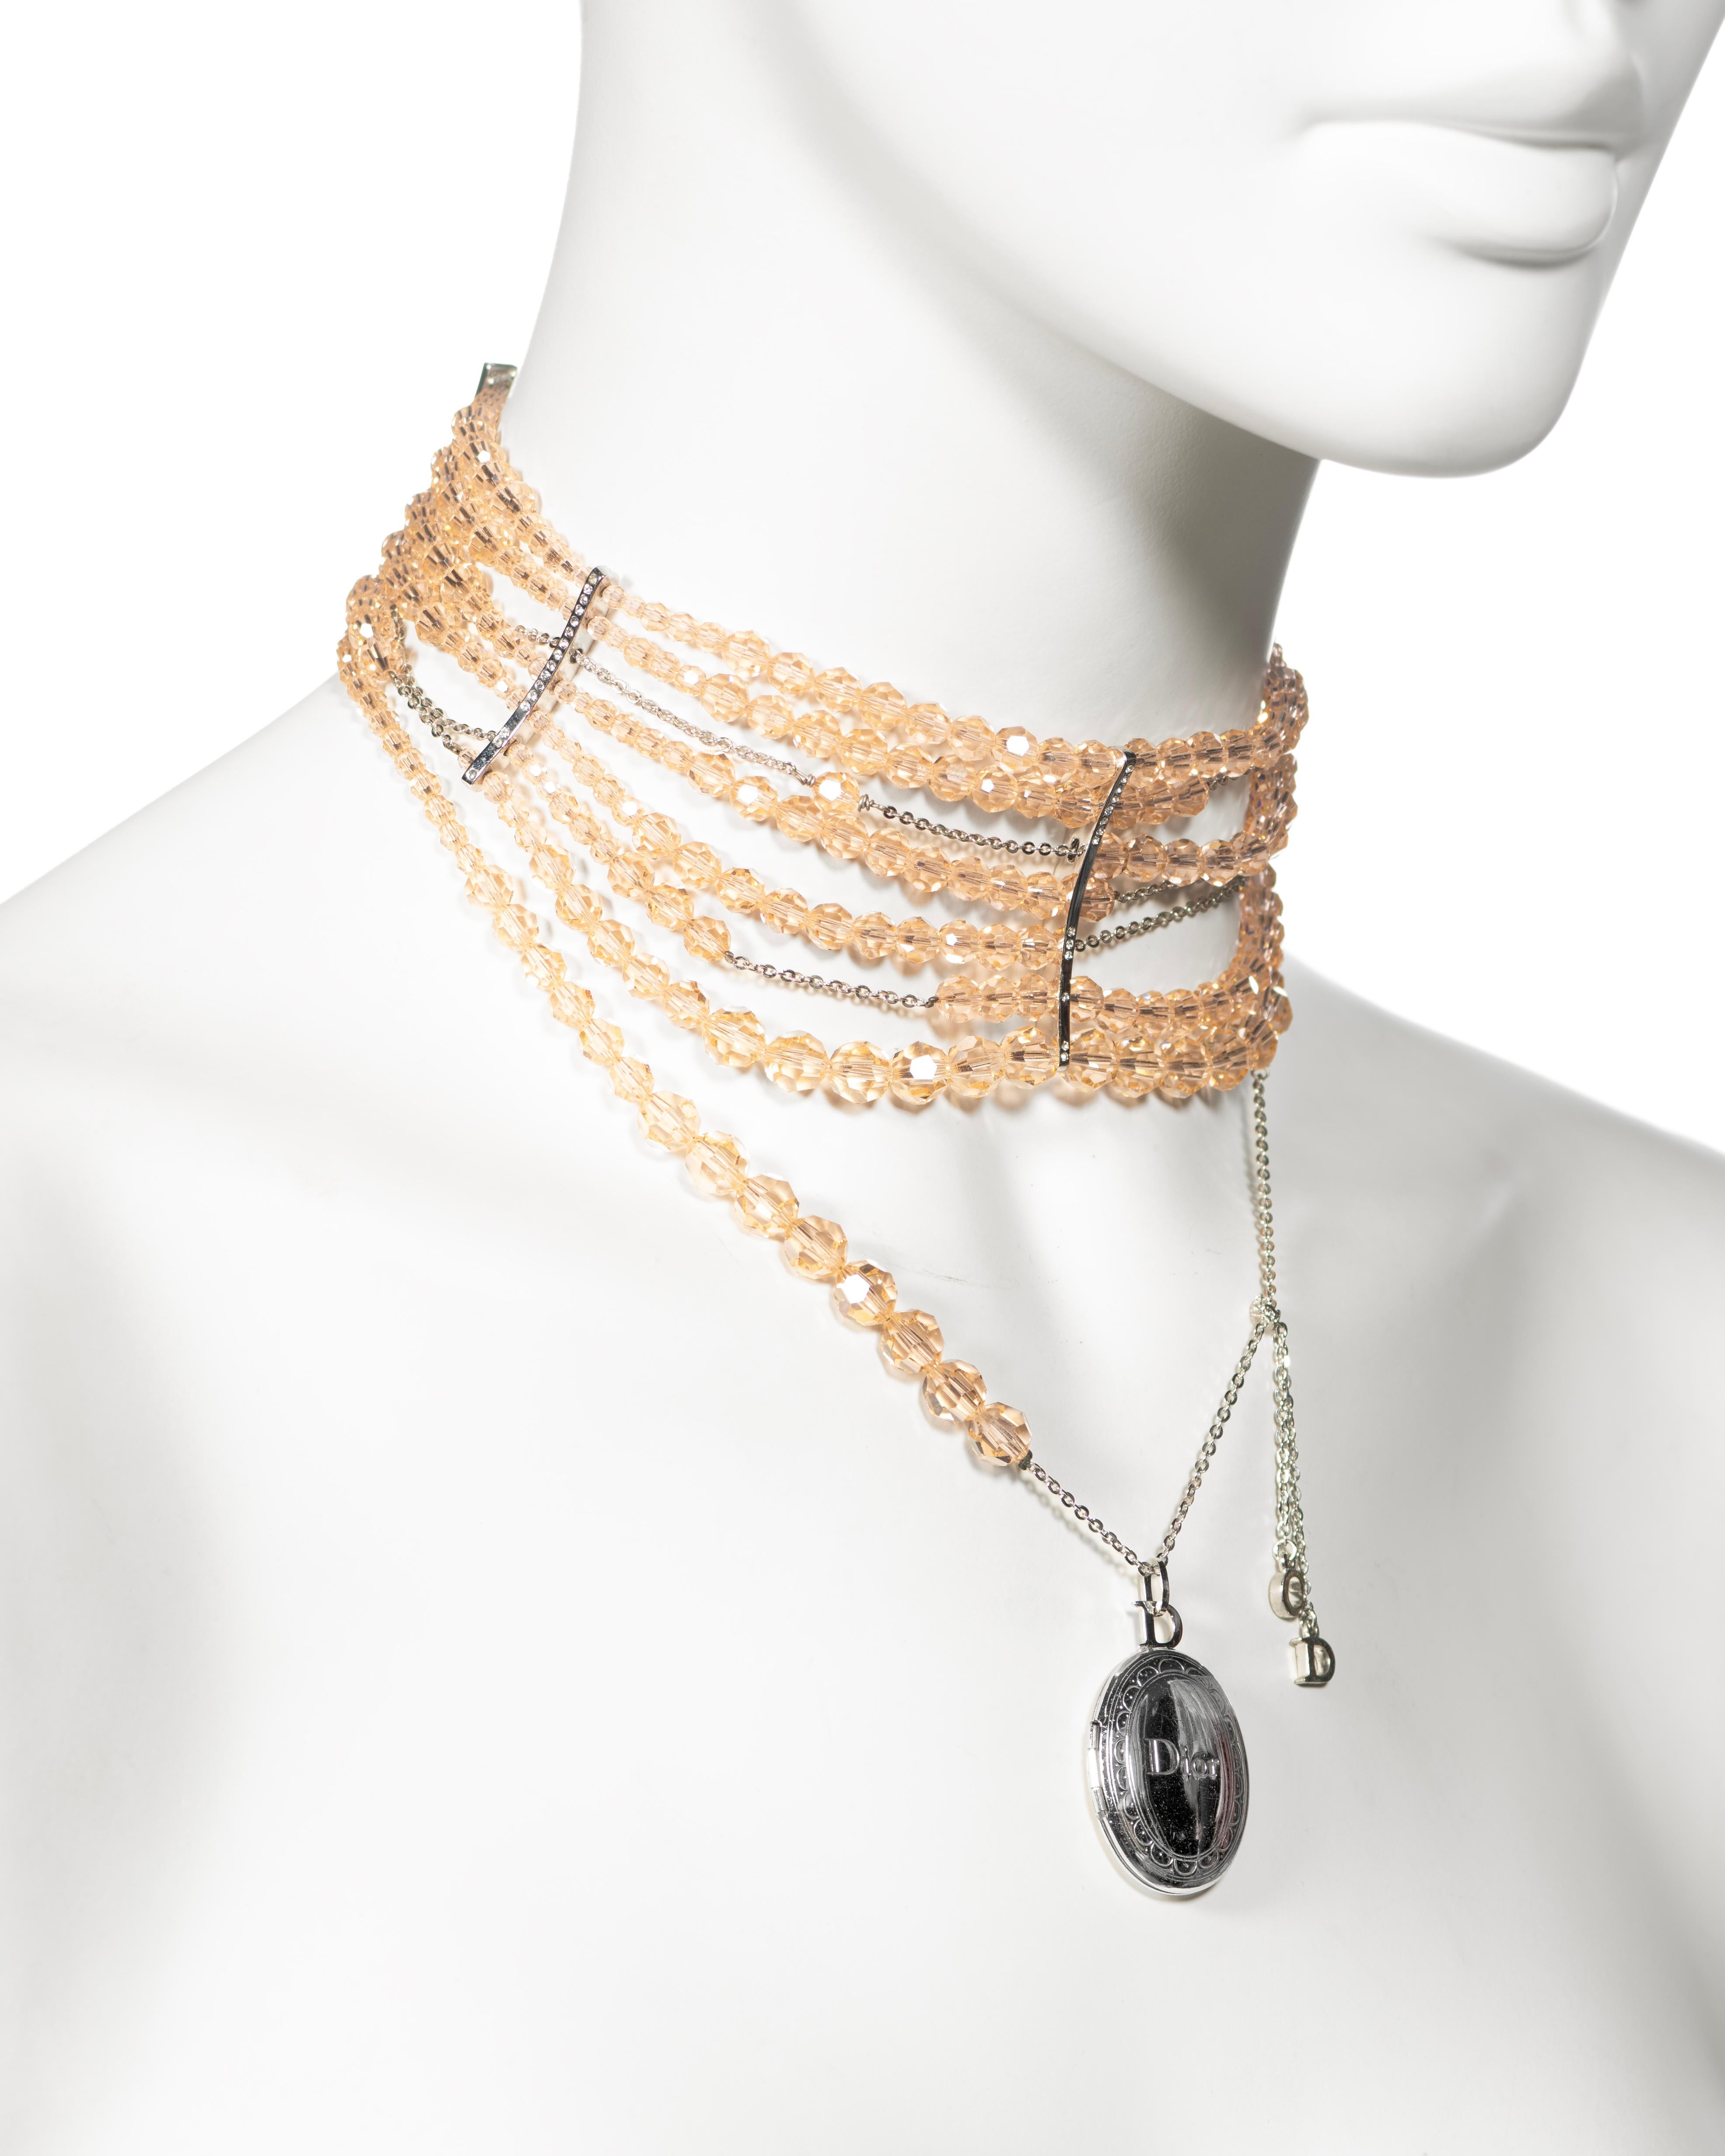 Christian Dior by John Galliano Distressed Peach Bead Choker Necklace, c. 2004 4